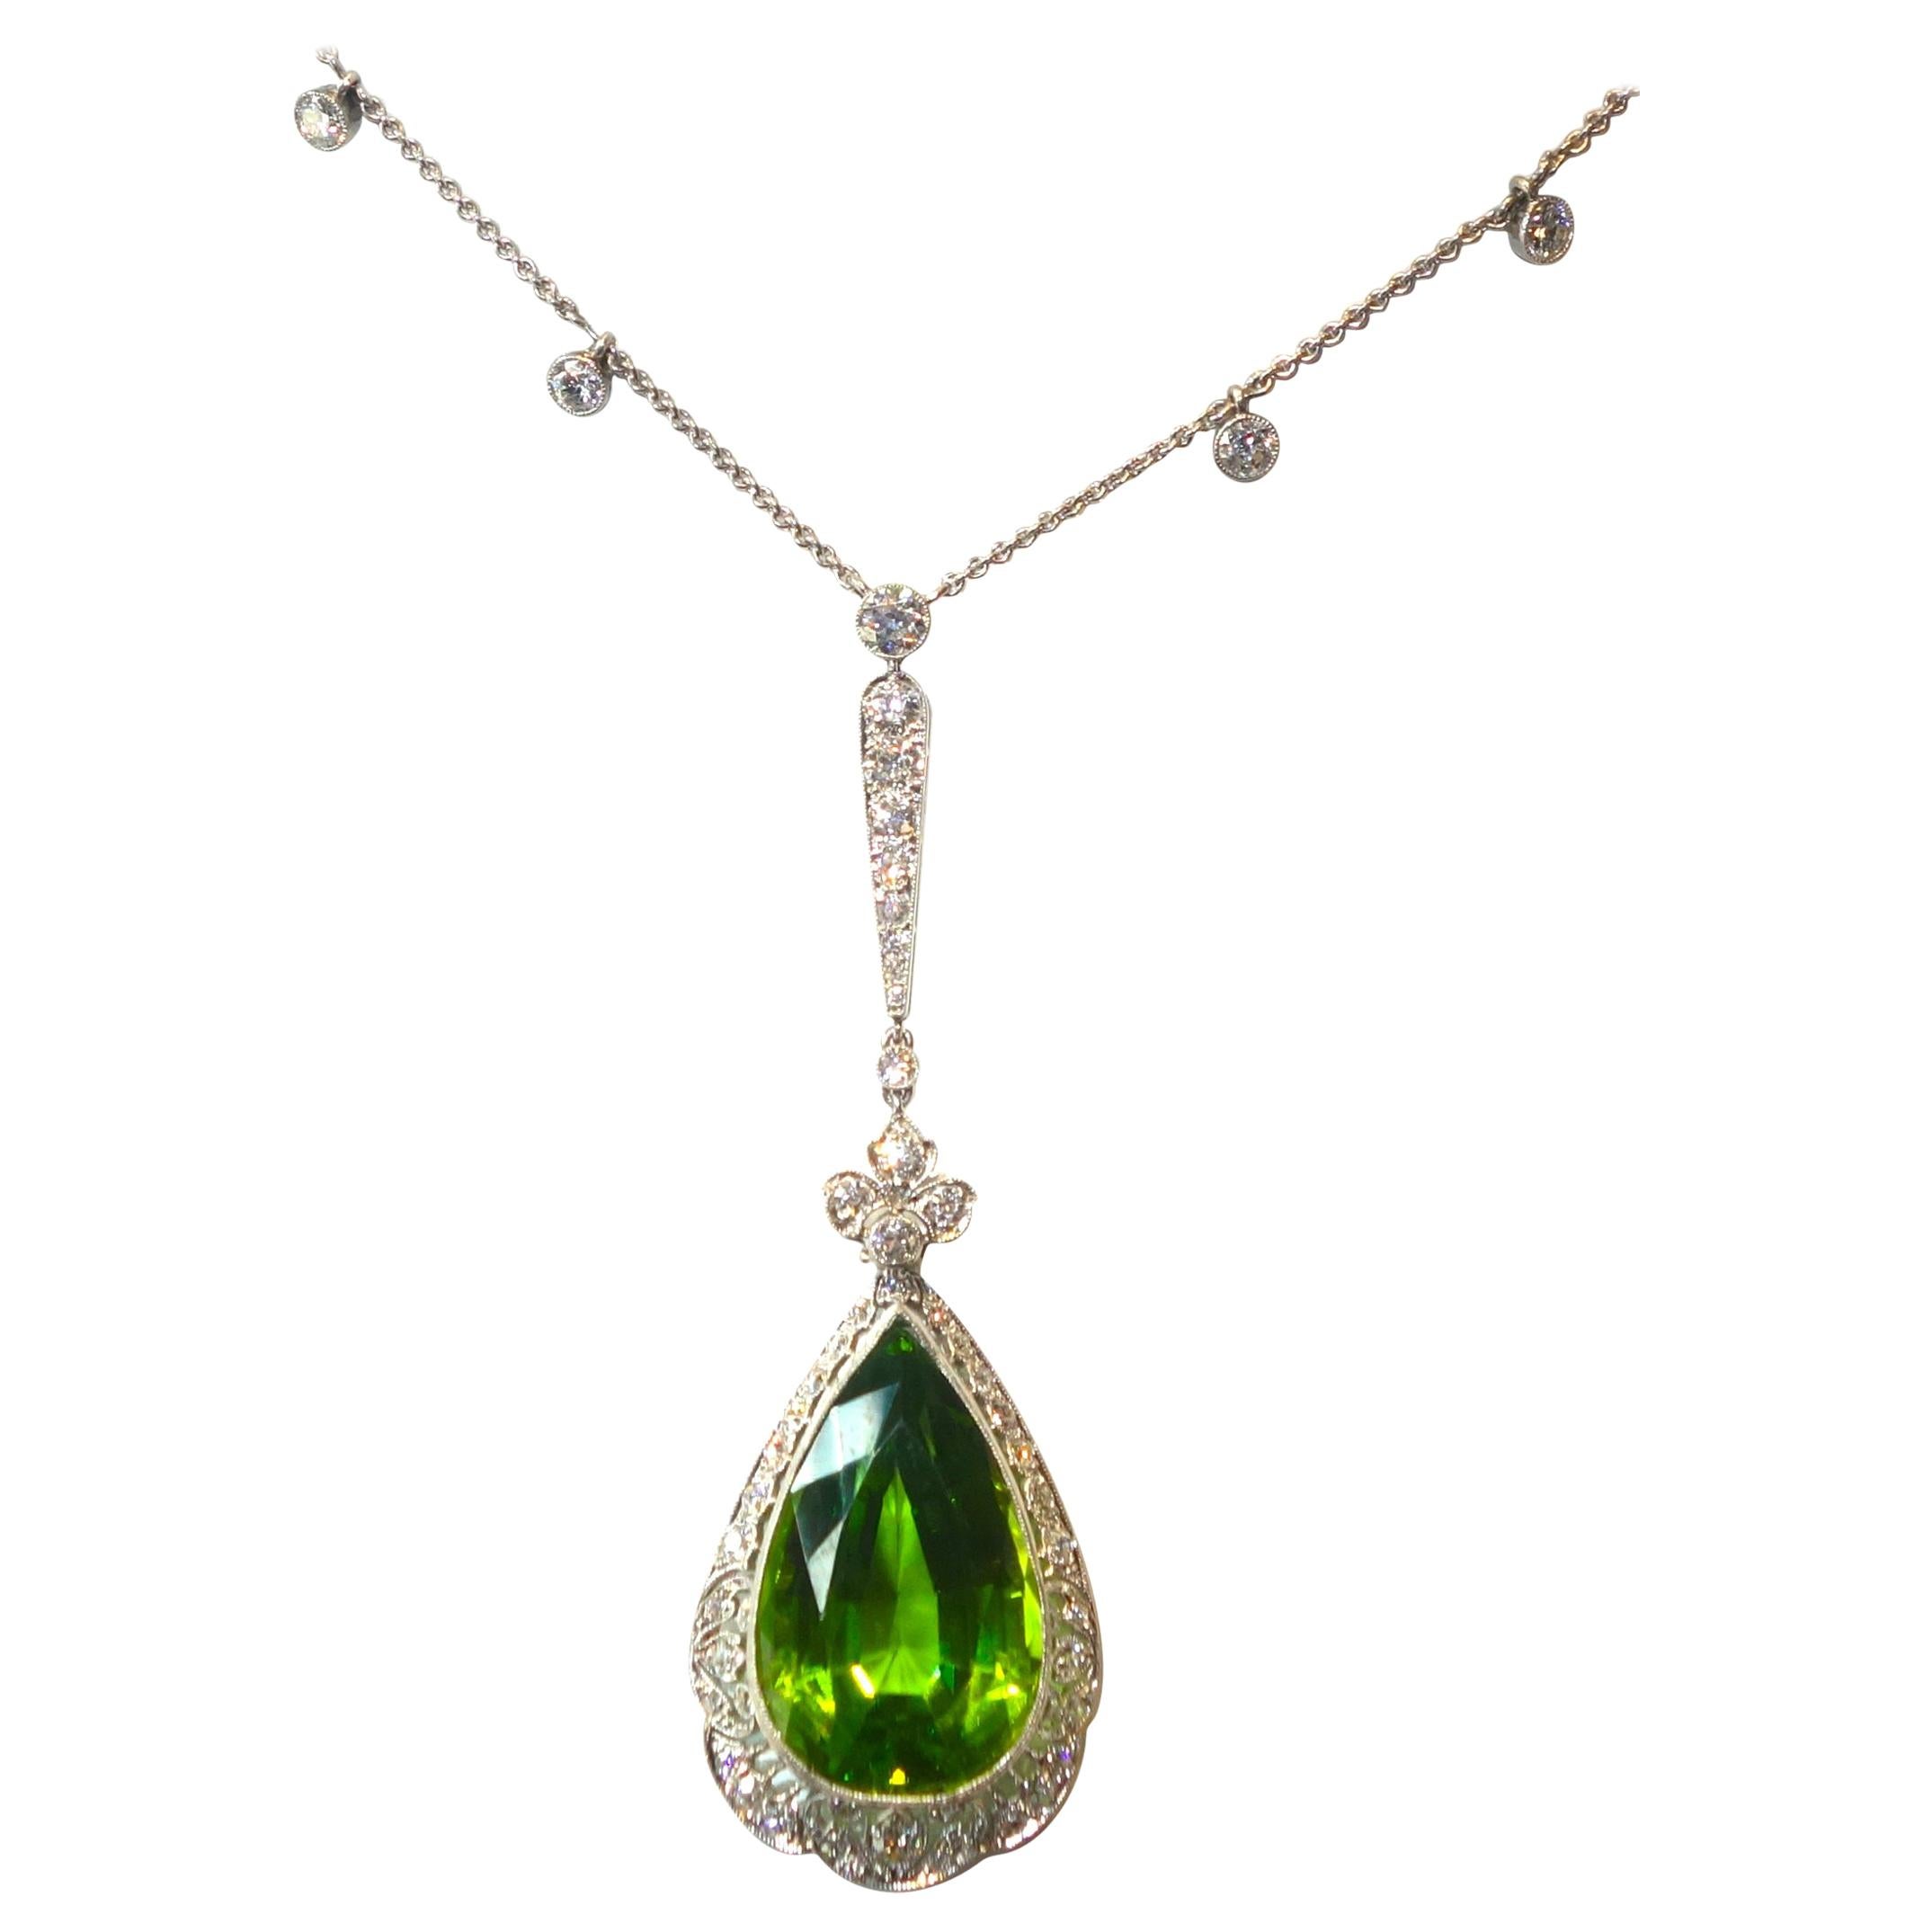 Edwardian Peridot and Diamond Necklace, Shreve & Co., circa 1918